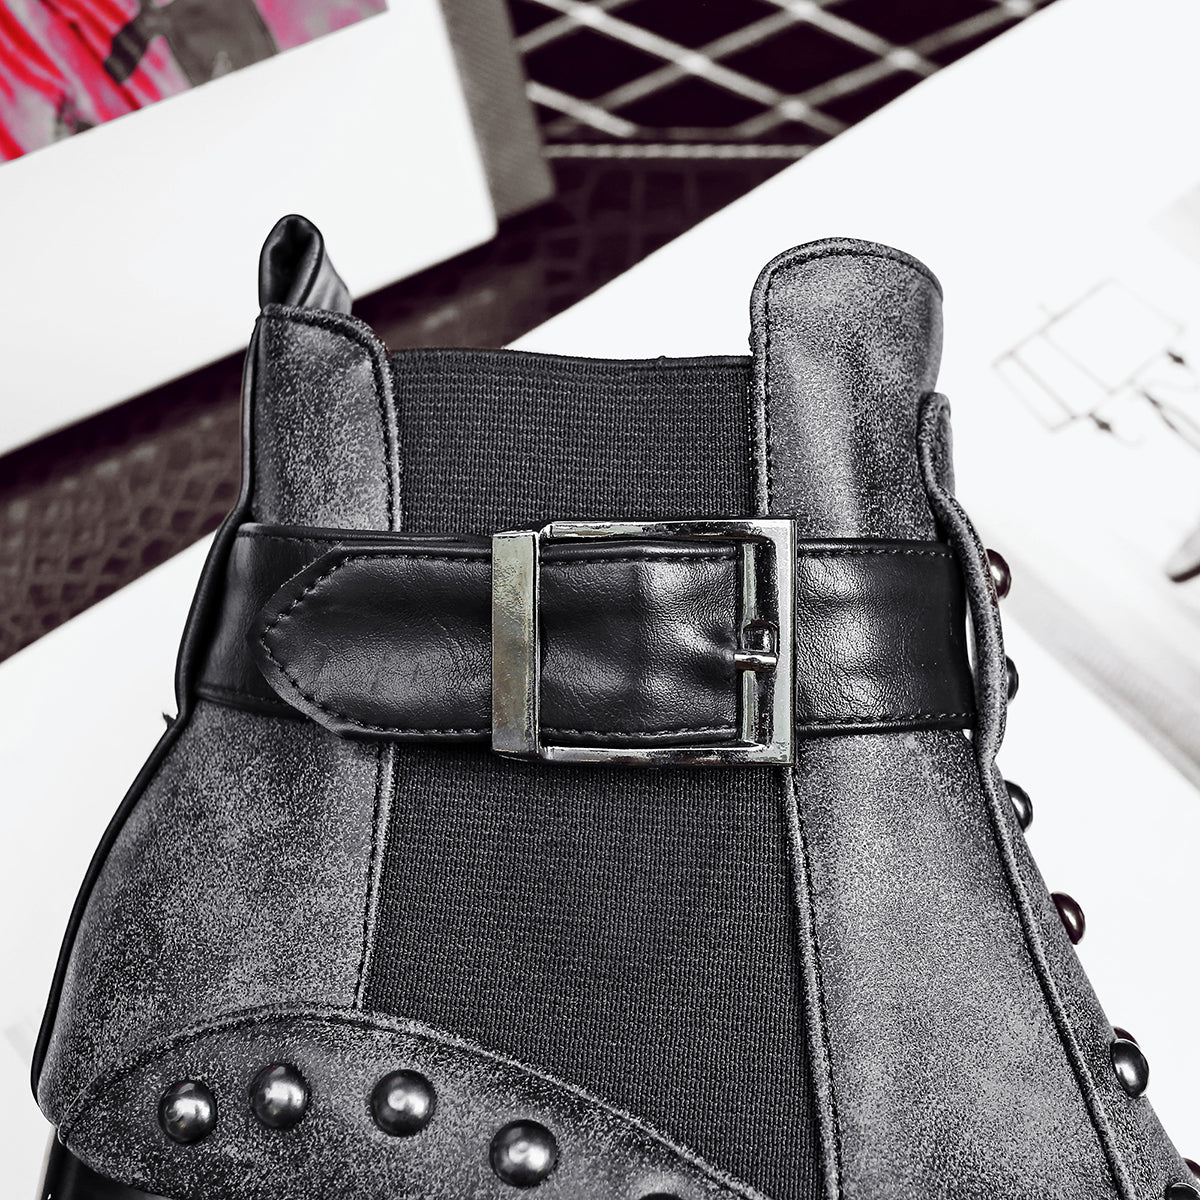 Bigsizeheels Matte rivet punk ankle boots- Black/big size boots